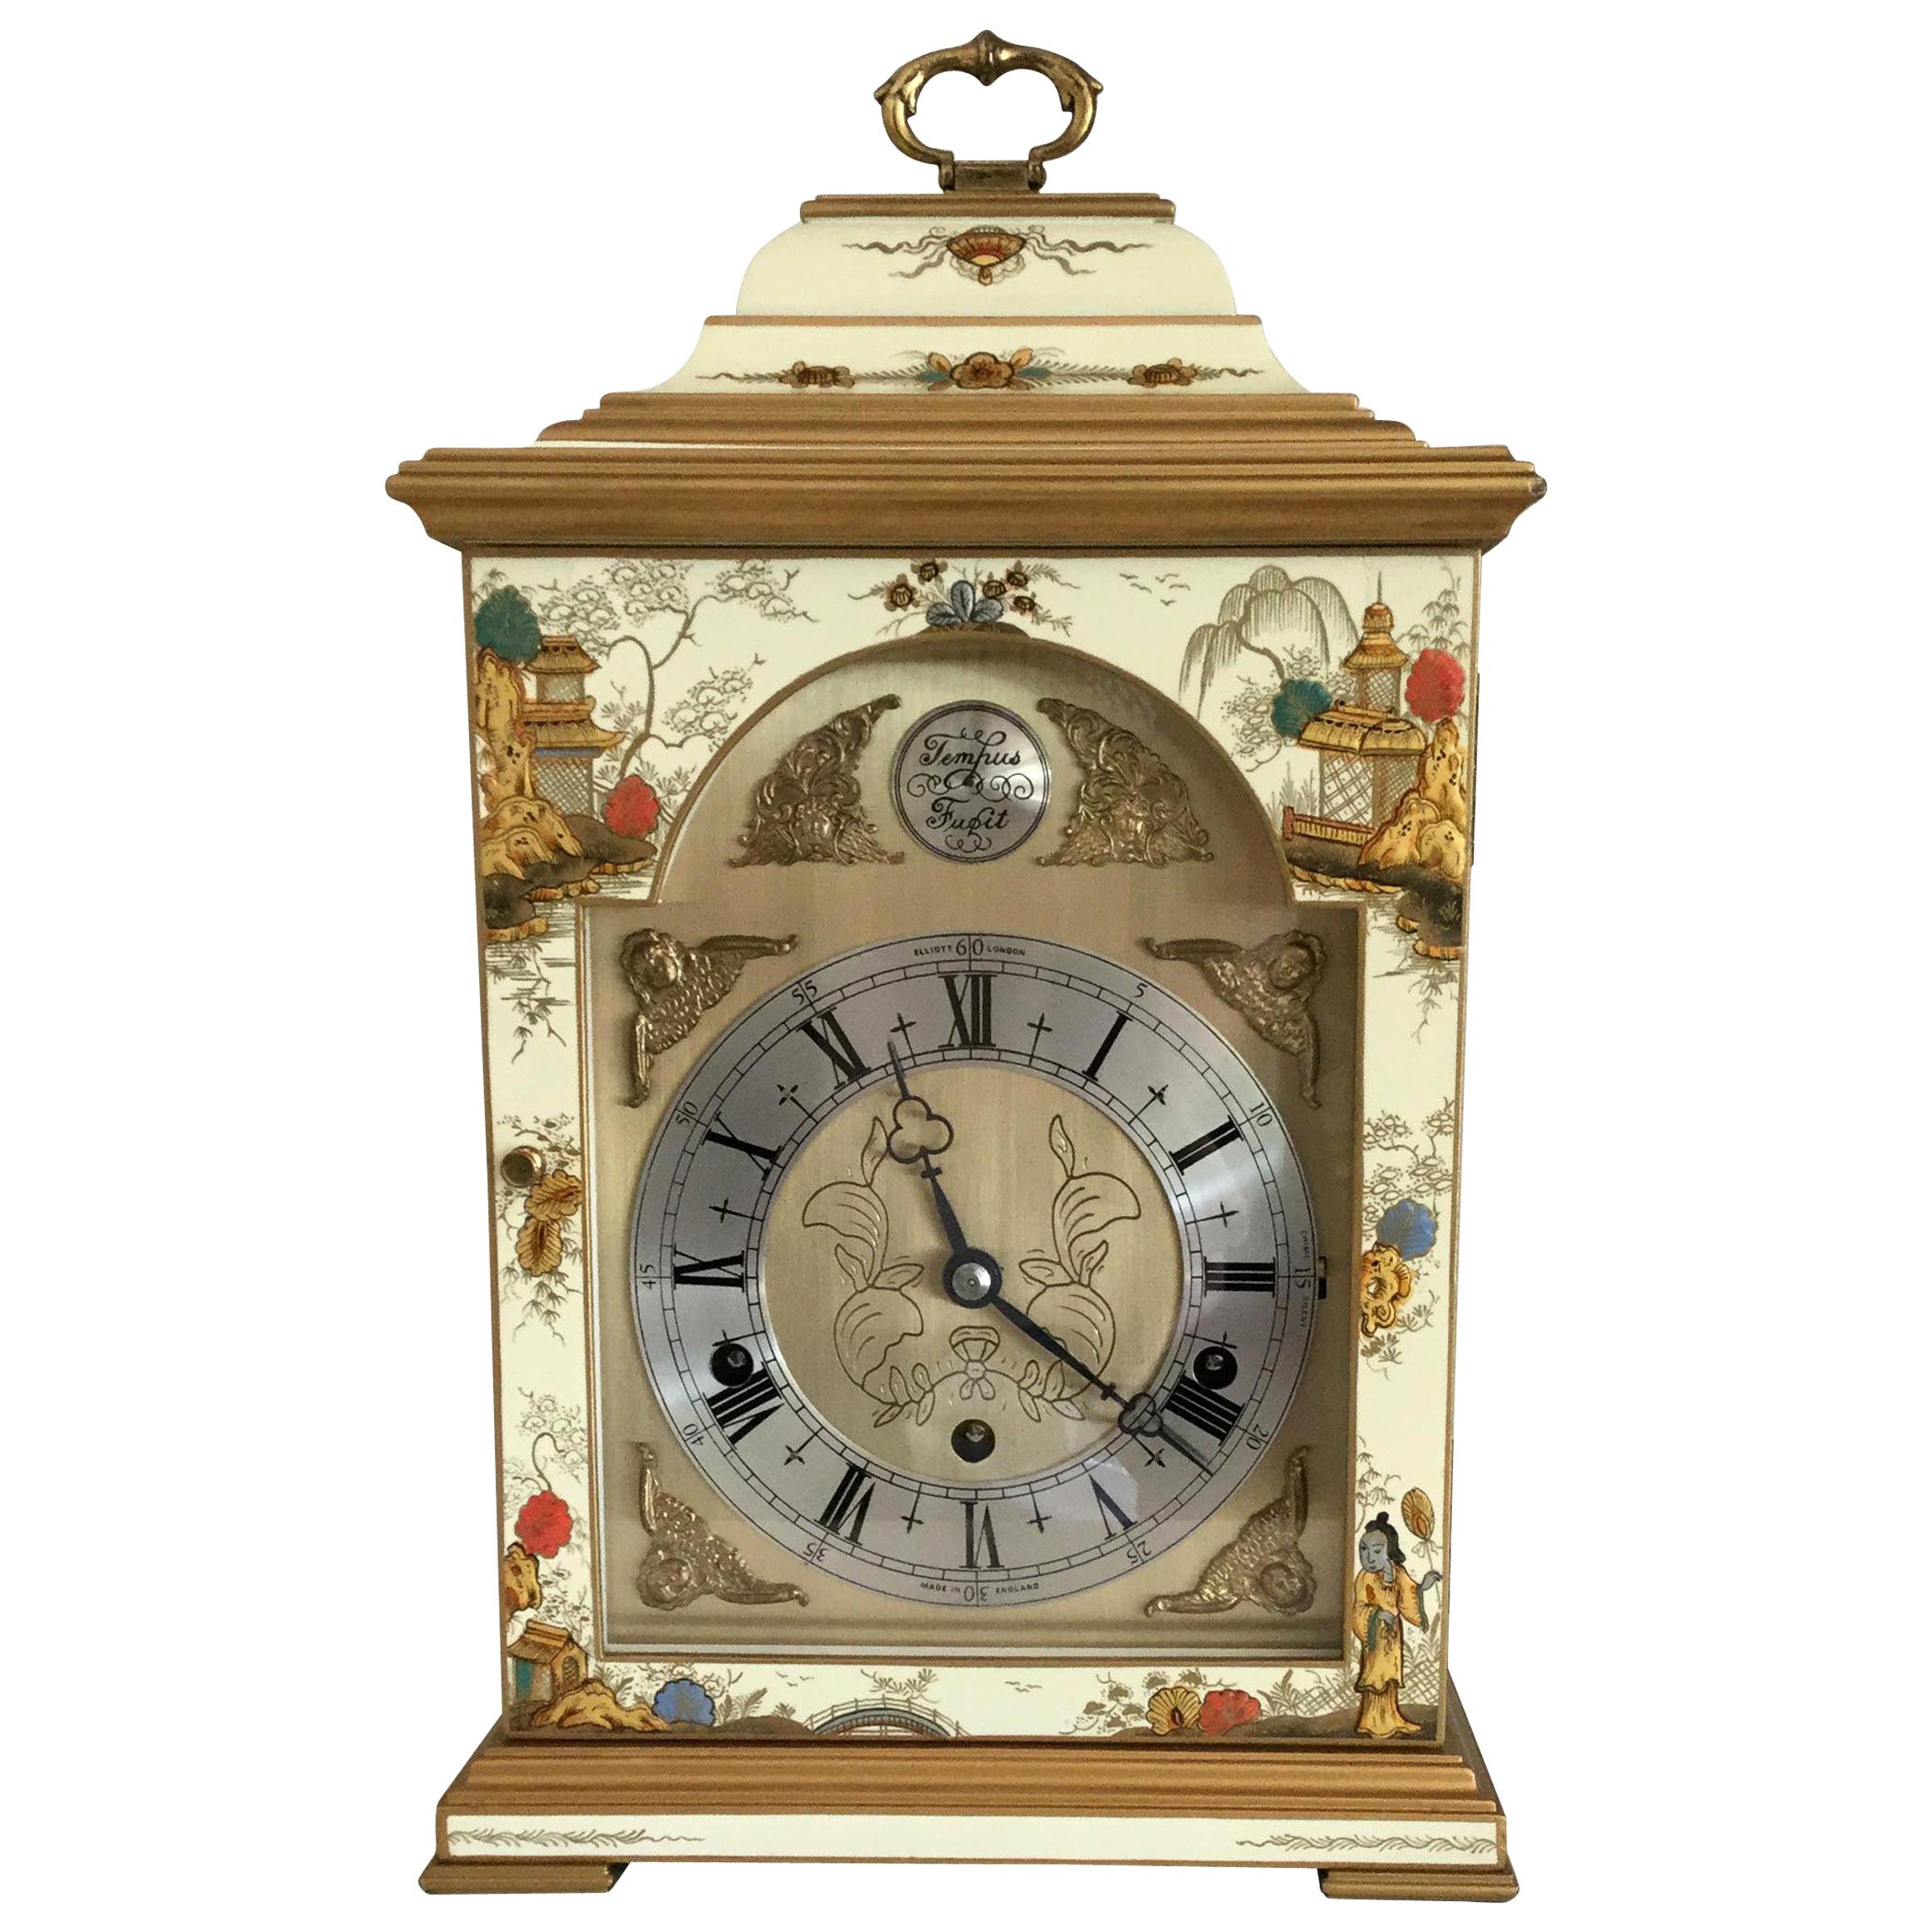 Chinoiserie Mantel Clock by Elliott of London, circa 1970s